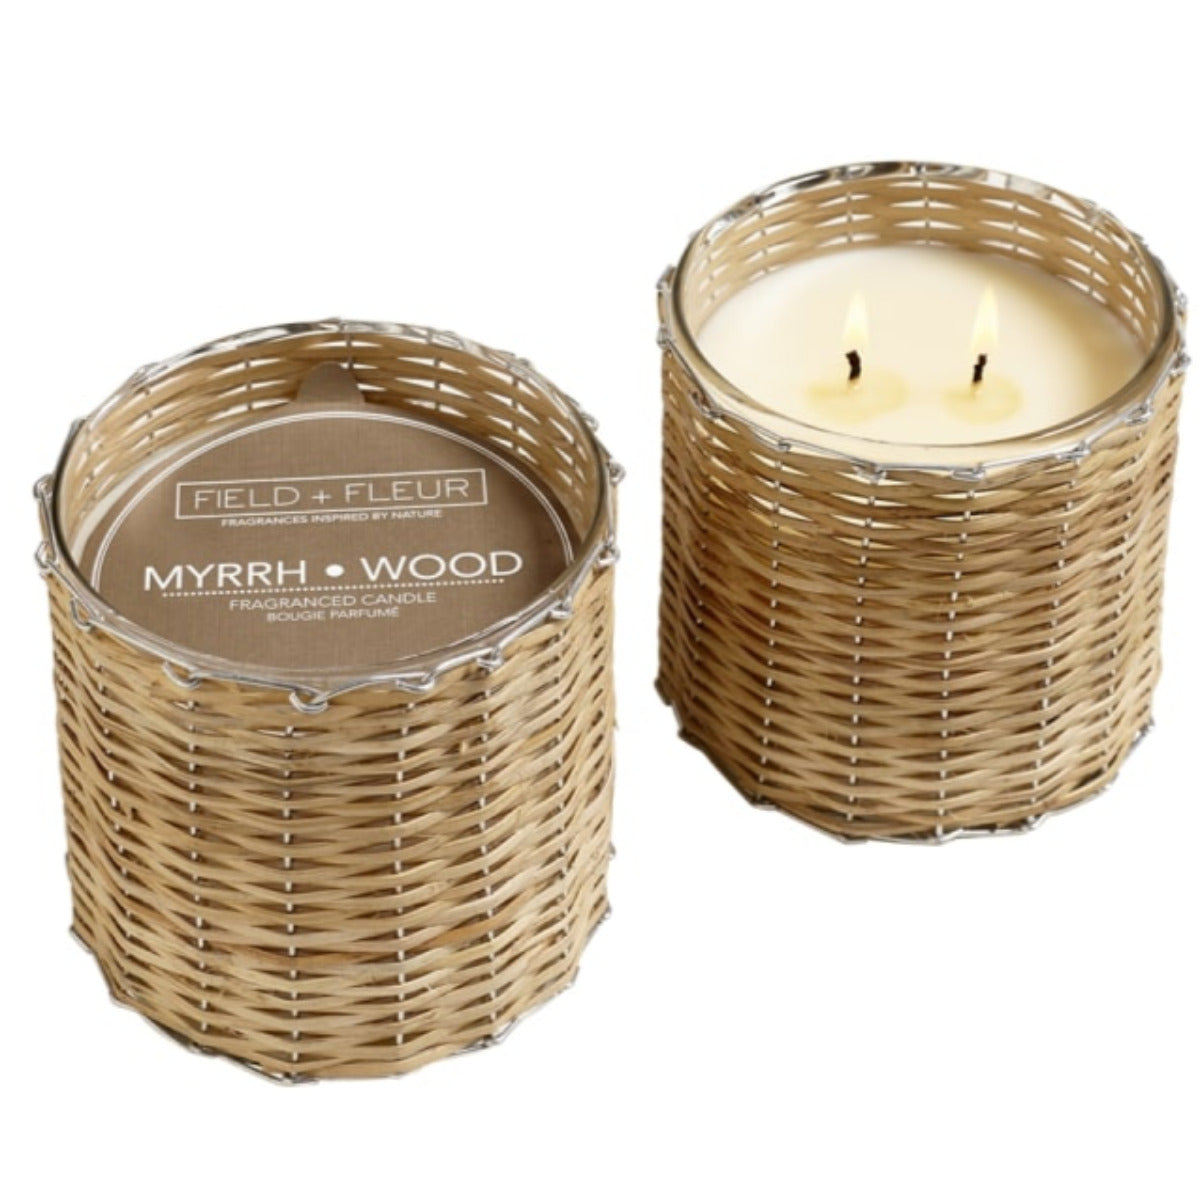 Myrrh Wood 2 wick handwoven candle 12oz